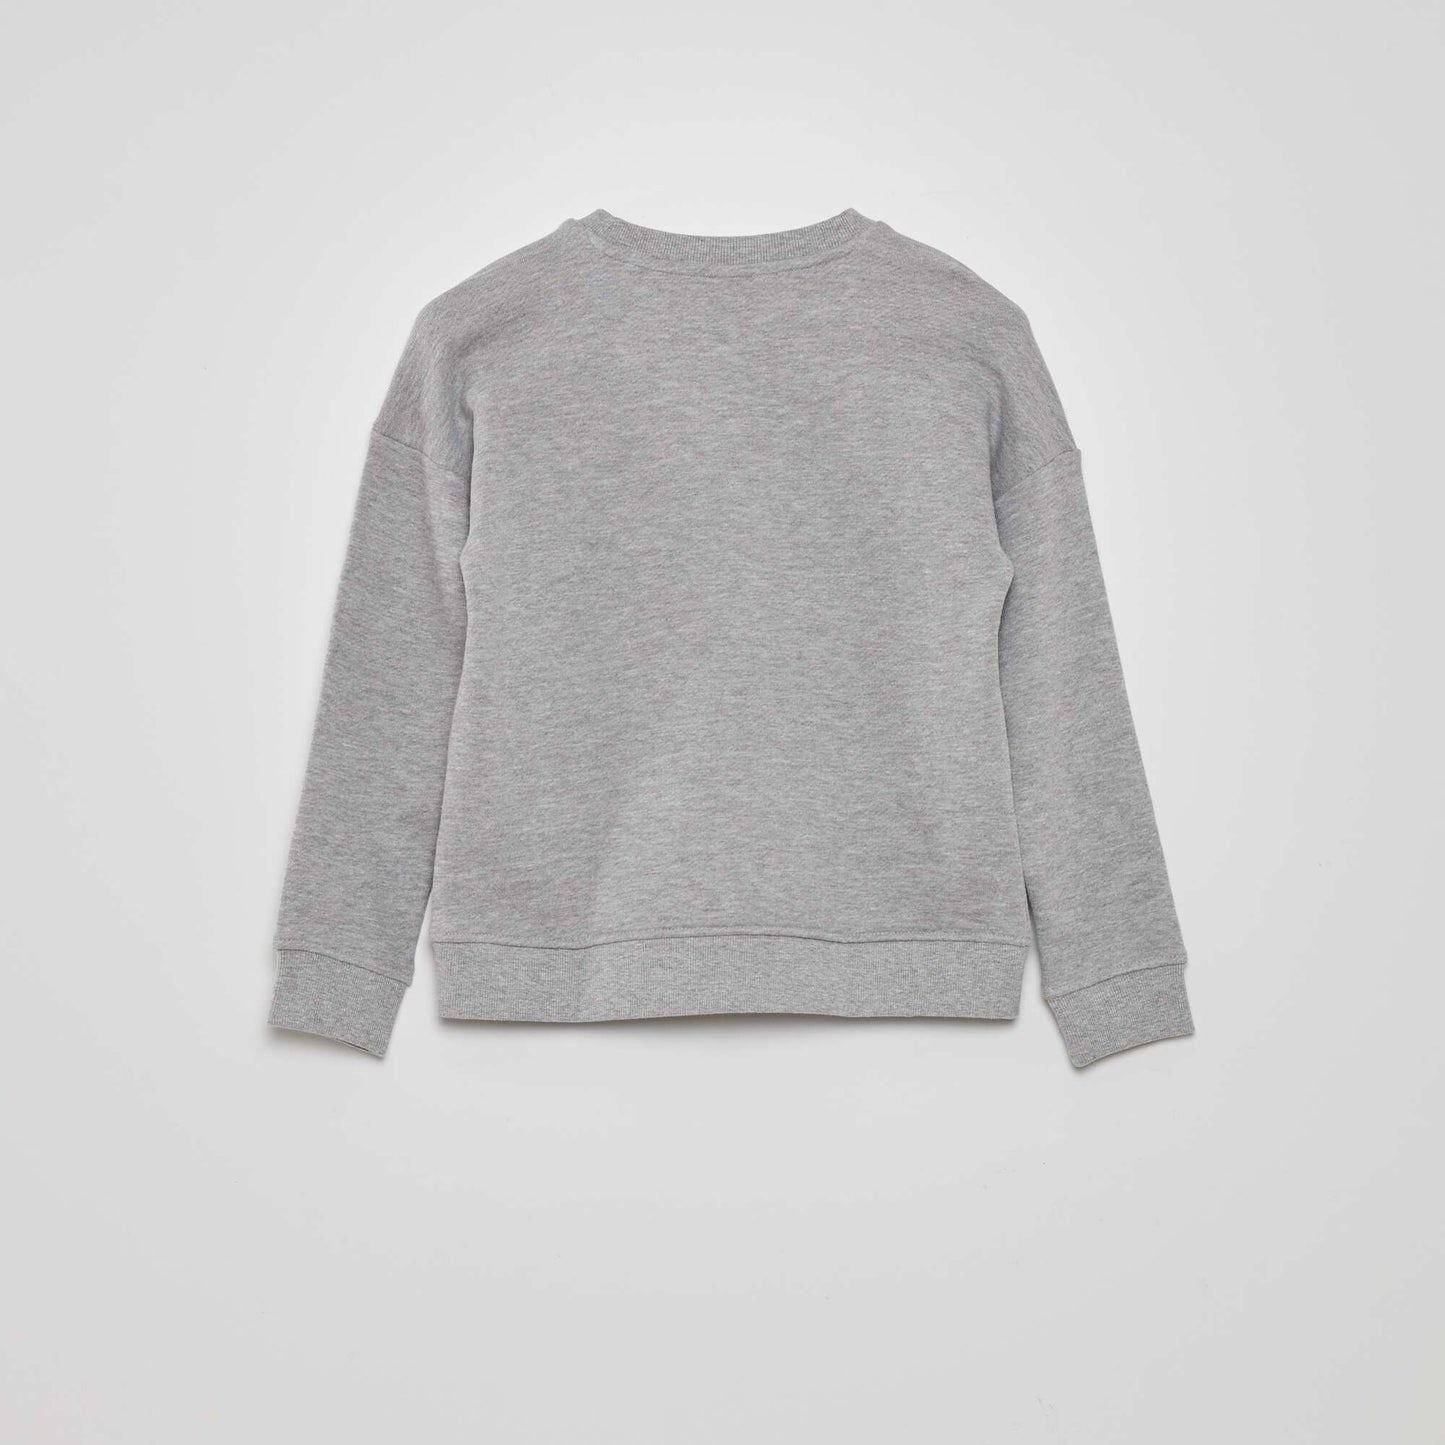 Lightweight sweatshirt fabric sweater GREY